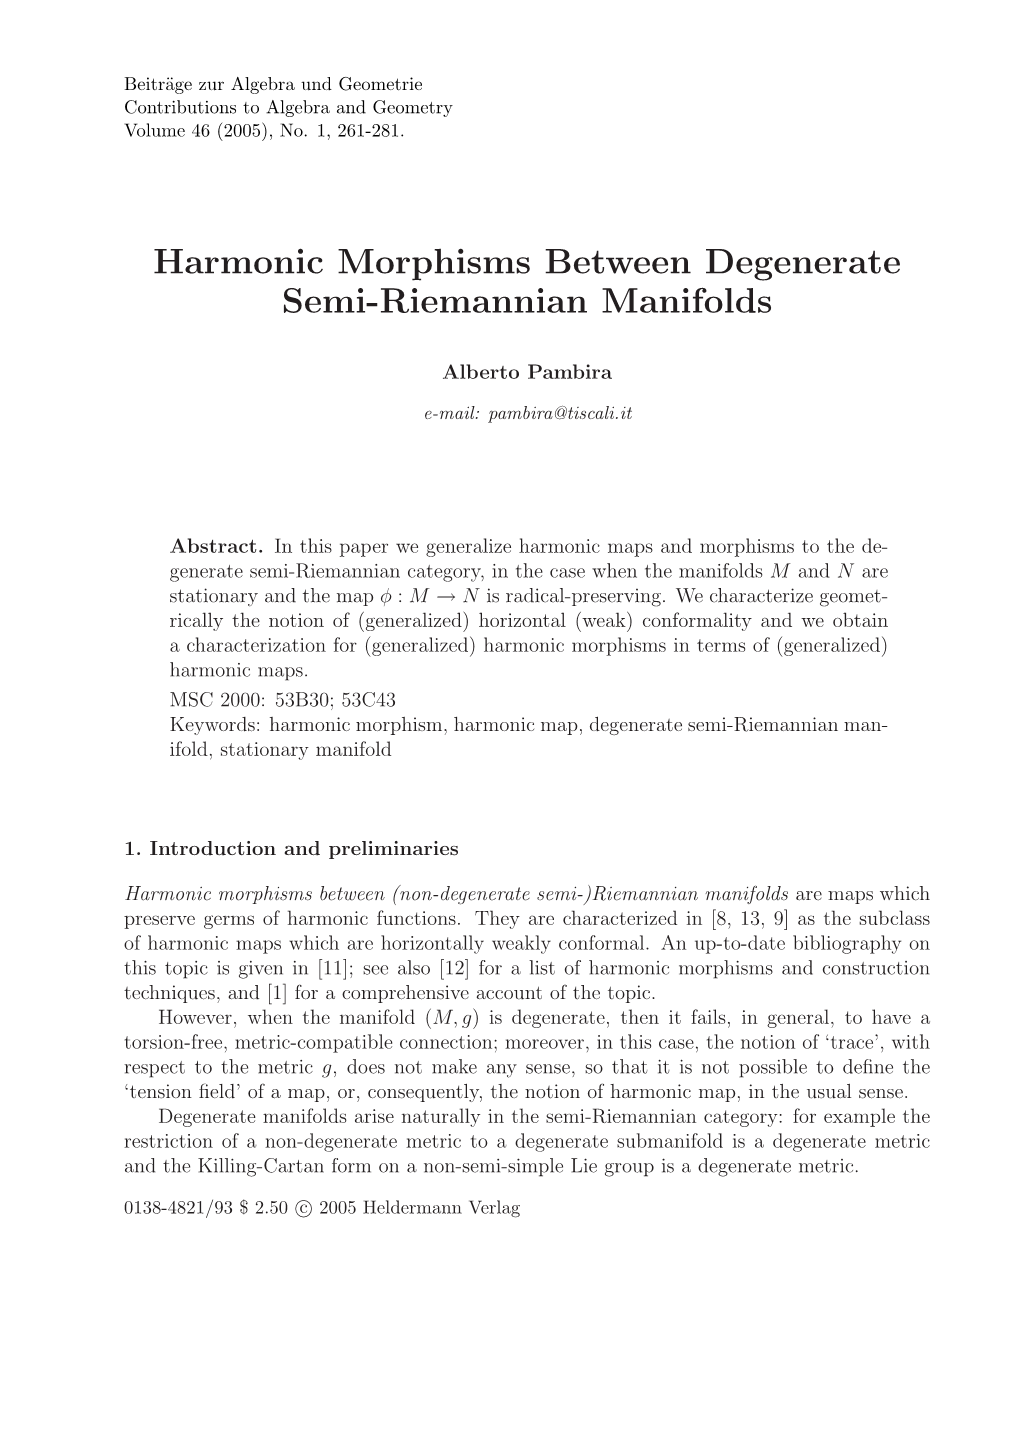 Harmonic Morphisms Between Degenerate Semi-Riemannian Manifolds